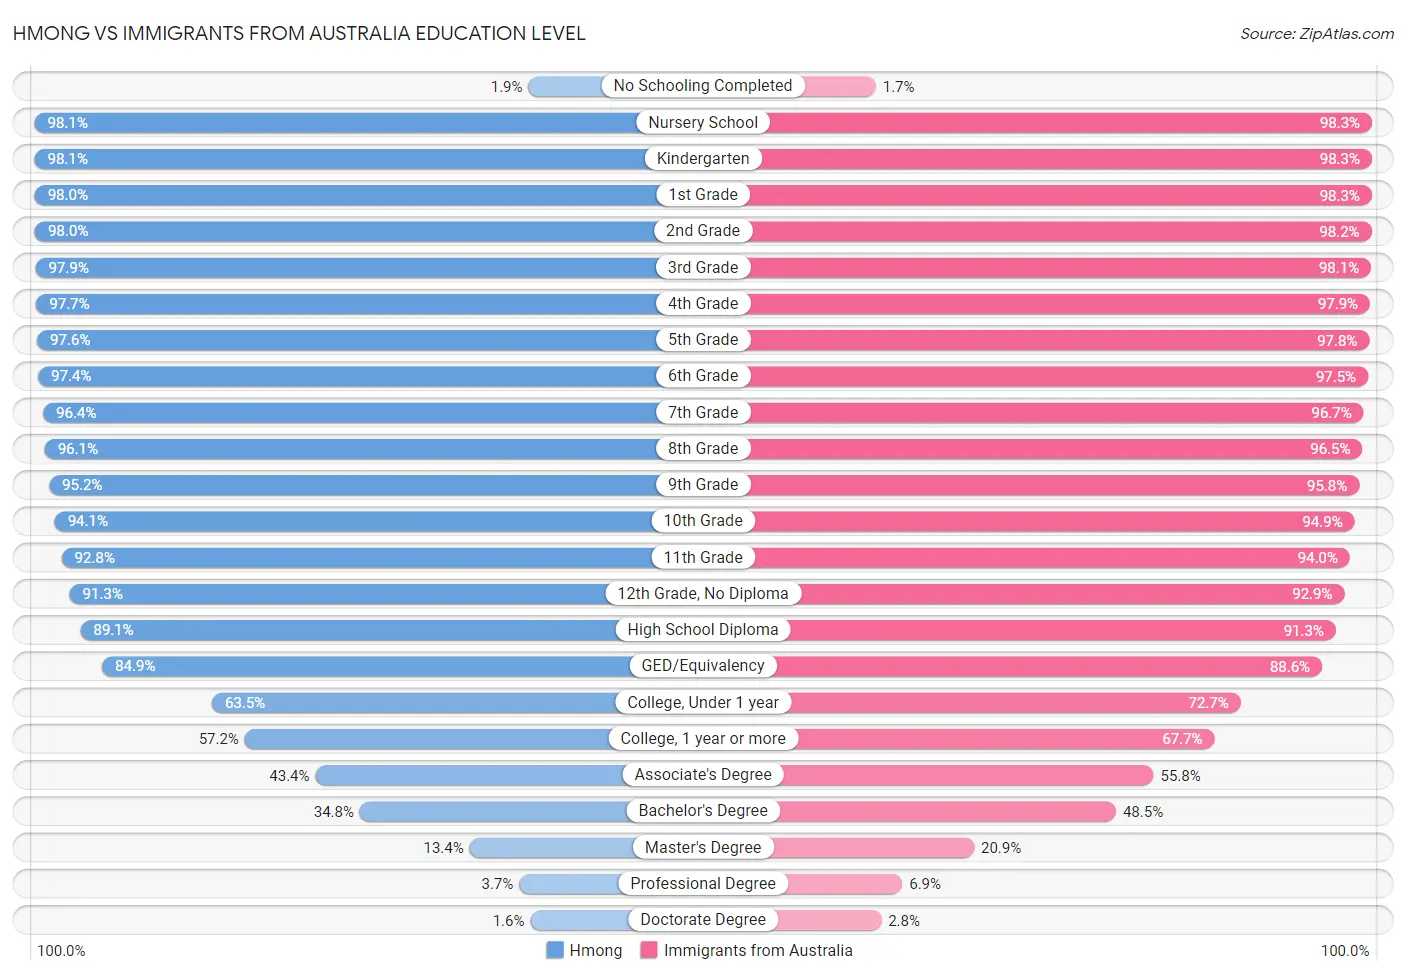 Hmong vs Immigrants from Australia Education Level